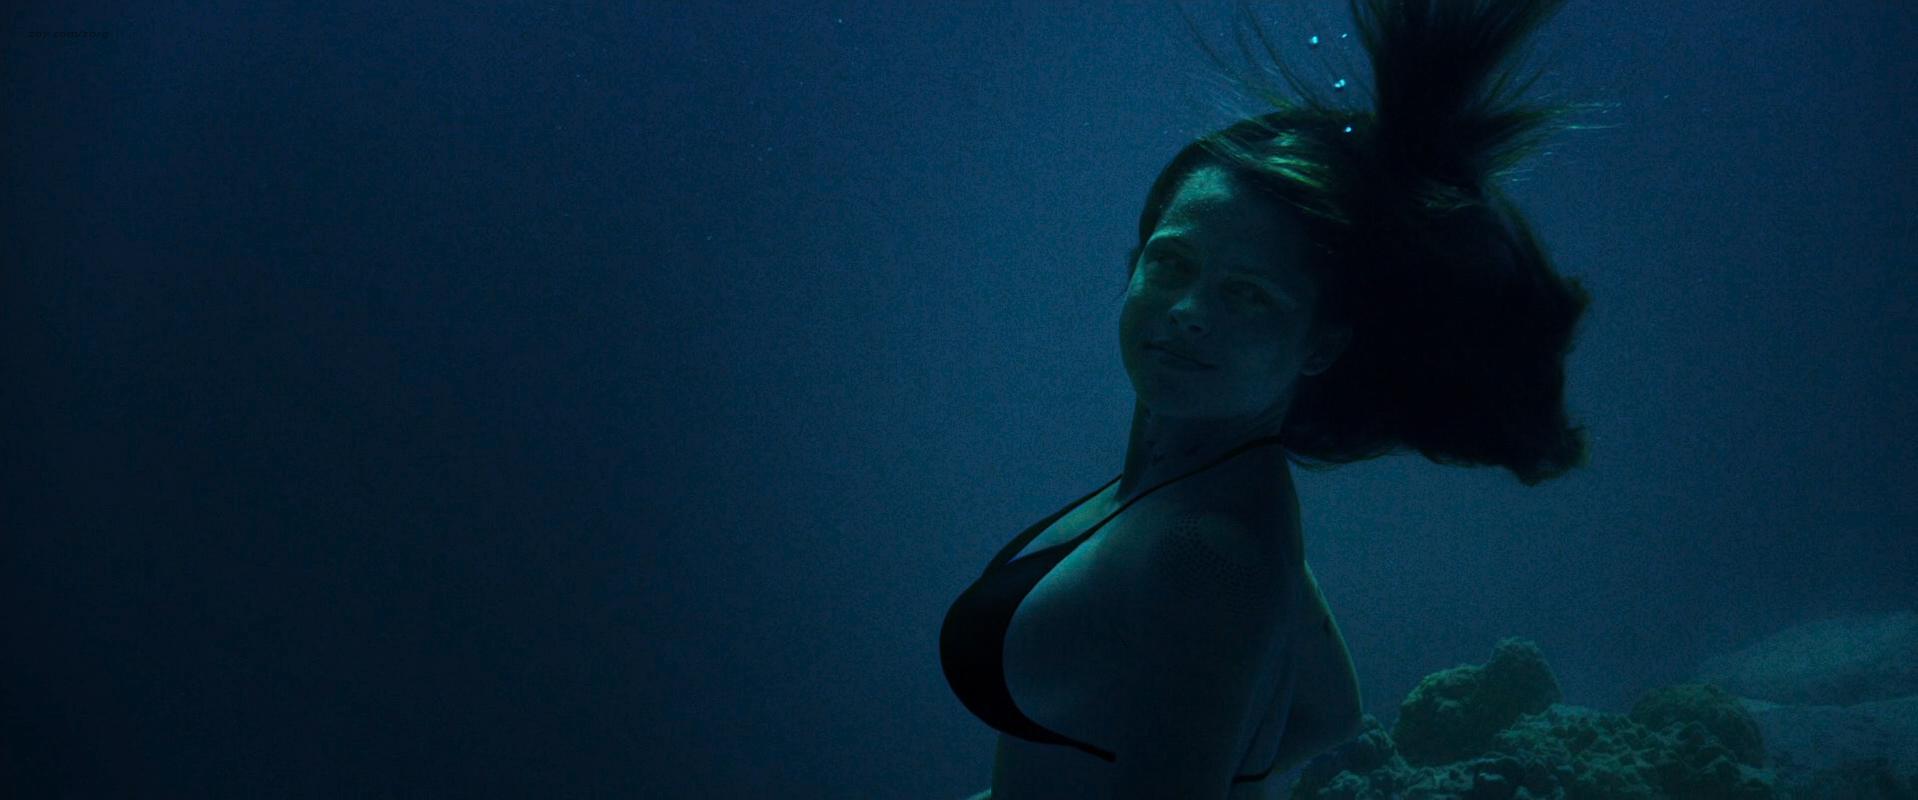 Nude Video Celebs Teresa Palmer Sexy Point Break 2015